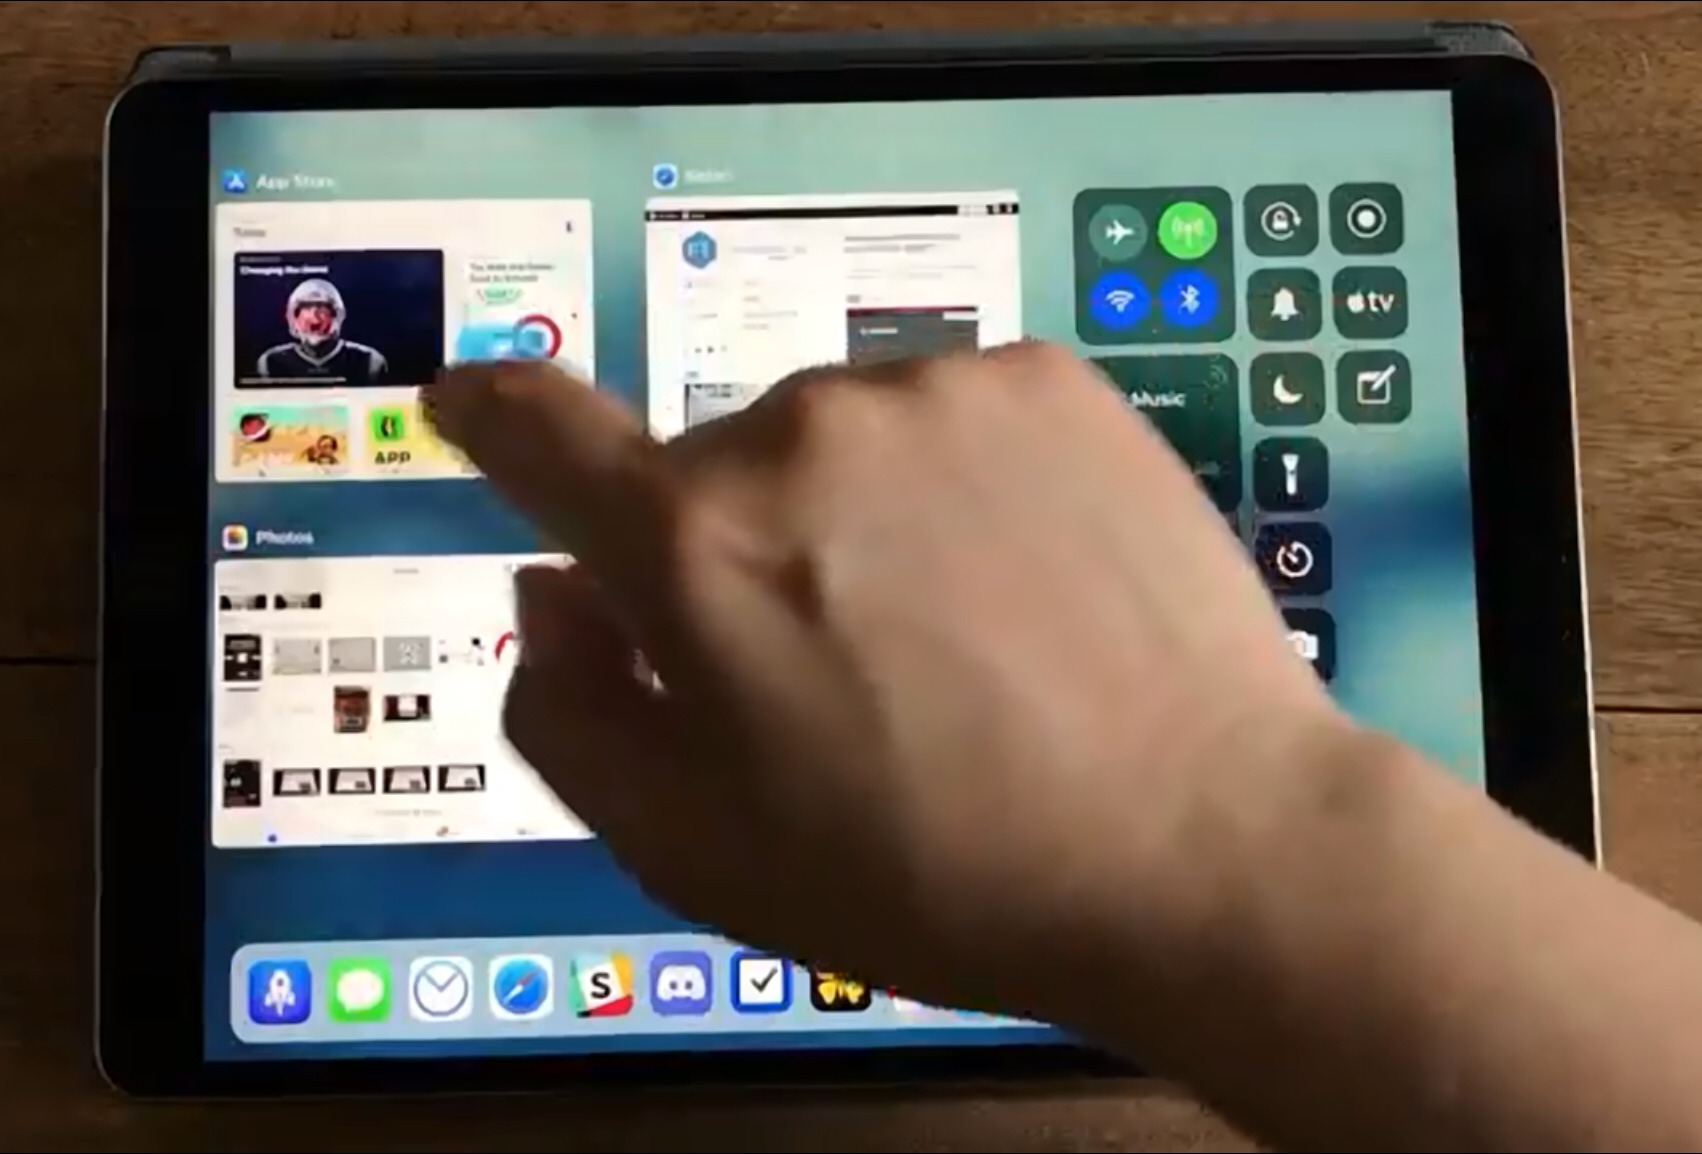 iOS 11 fundamentally changes the iPad